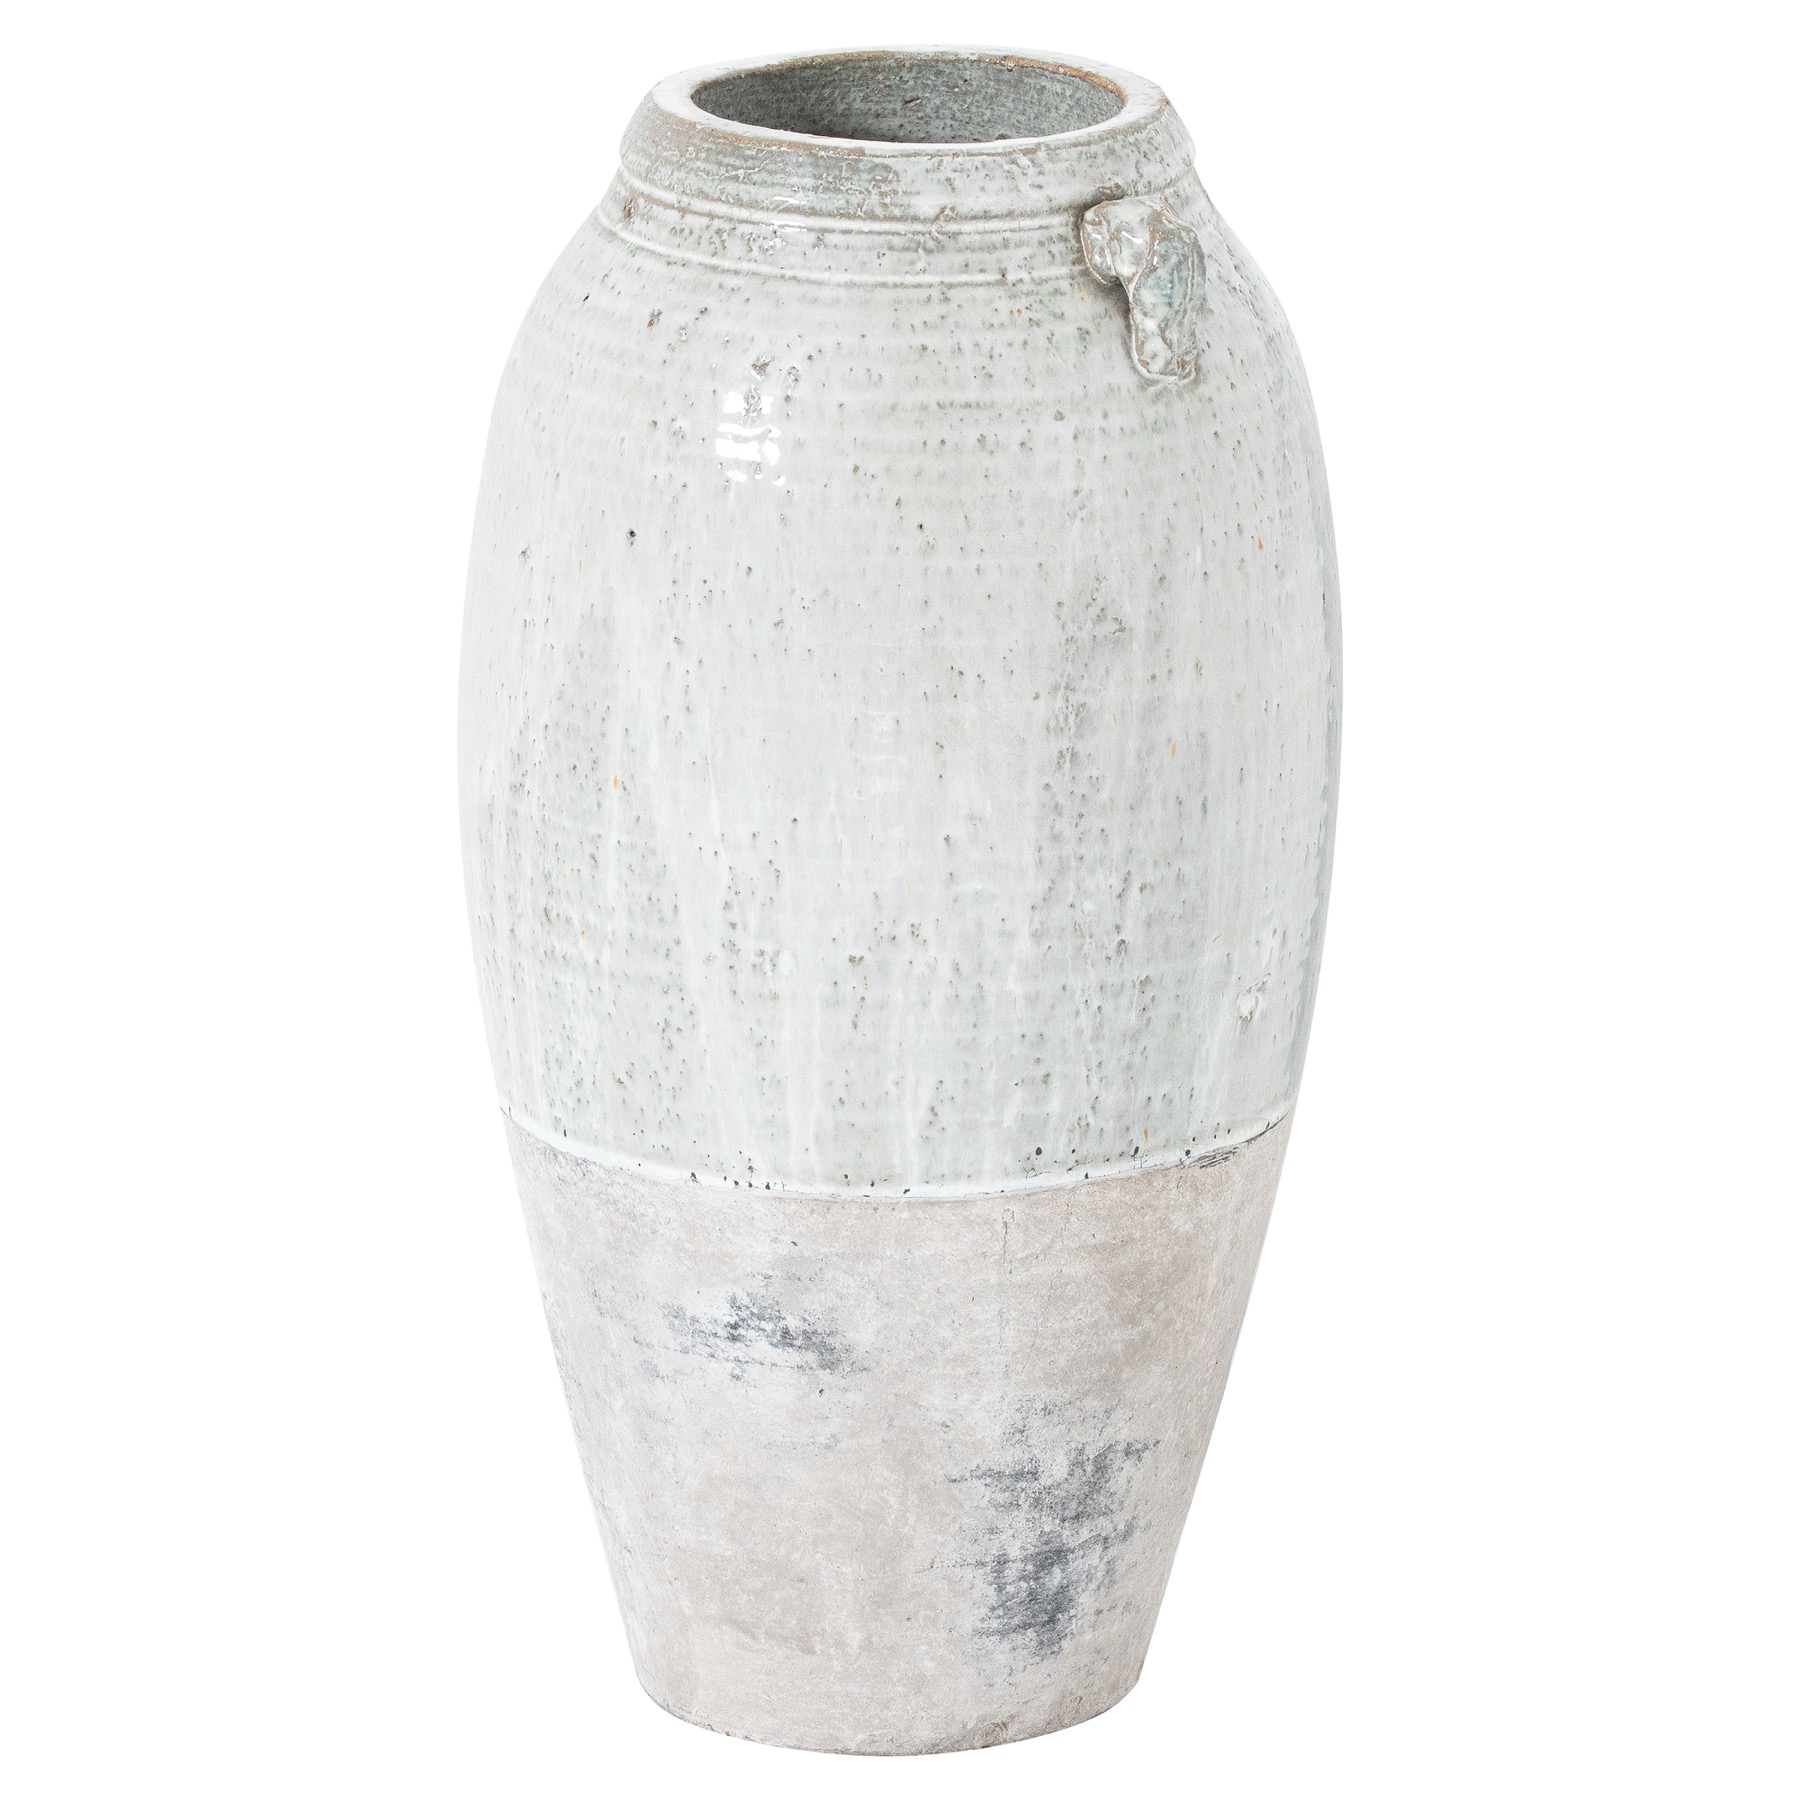 Ceramic Dipped Amphora Vase - Image 1